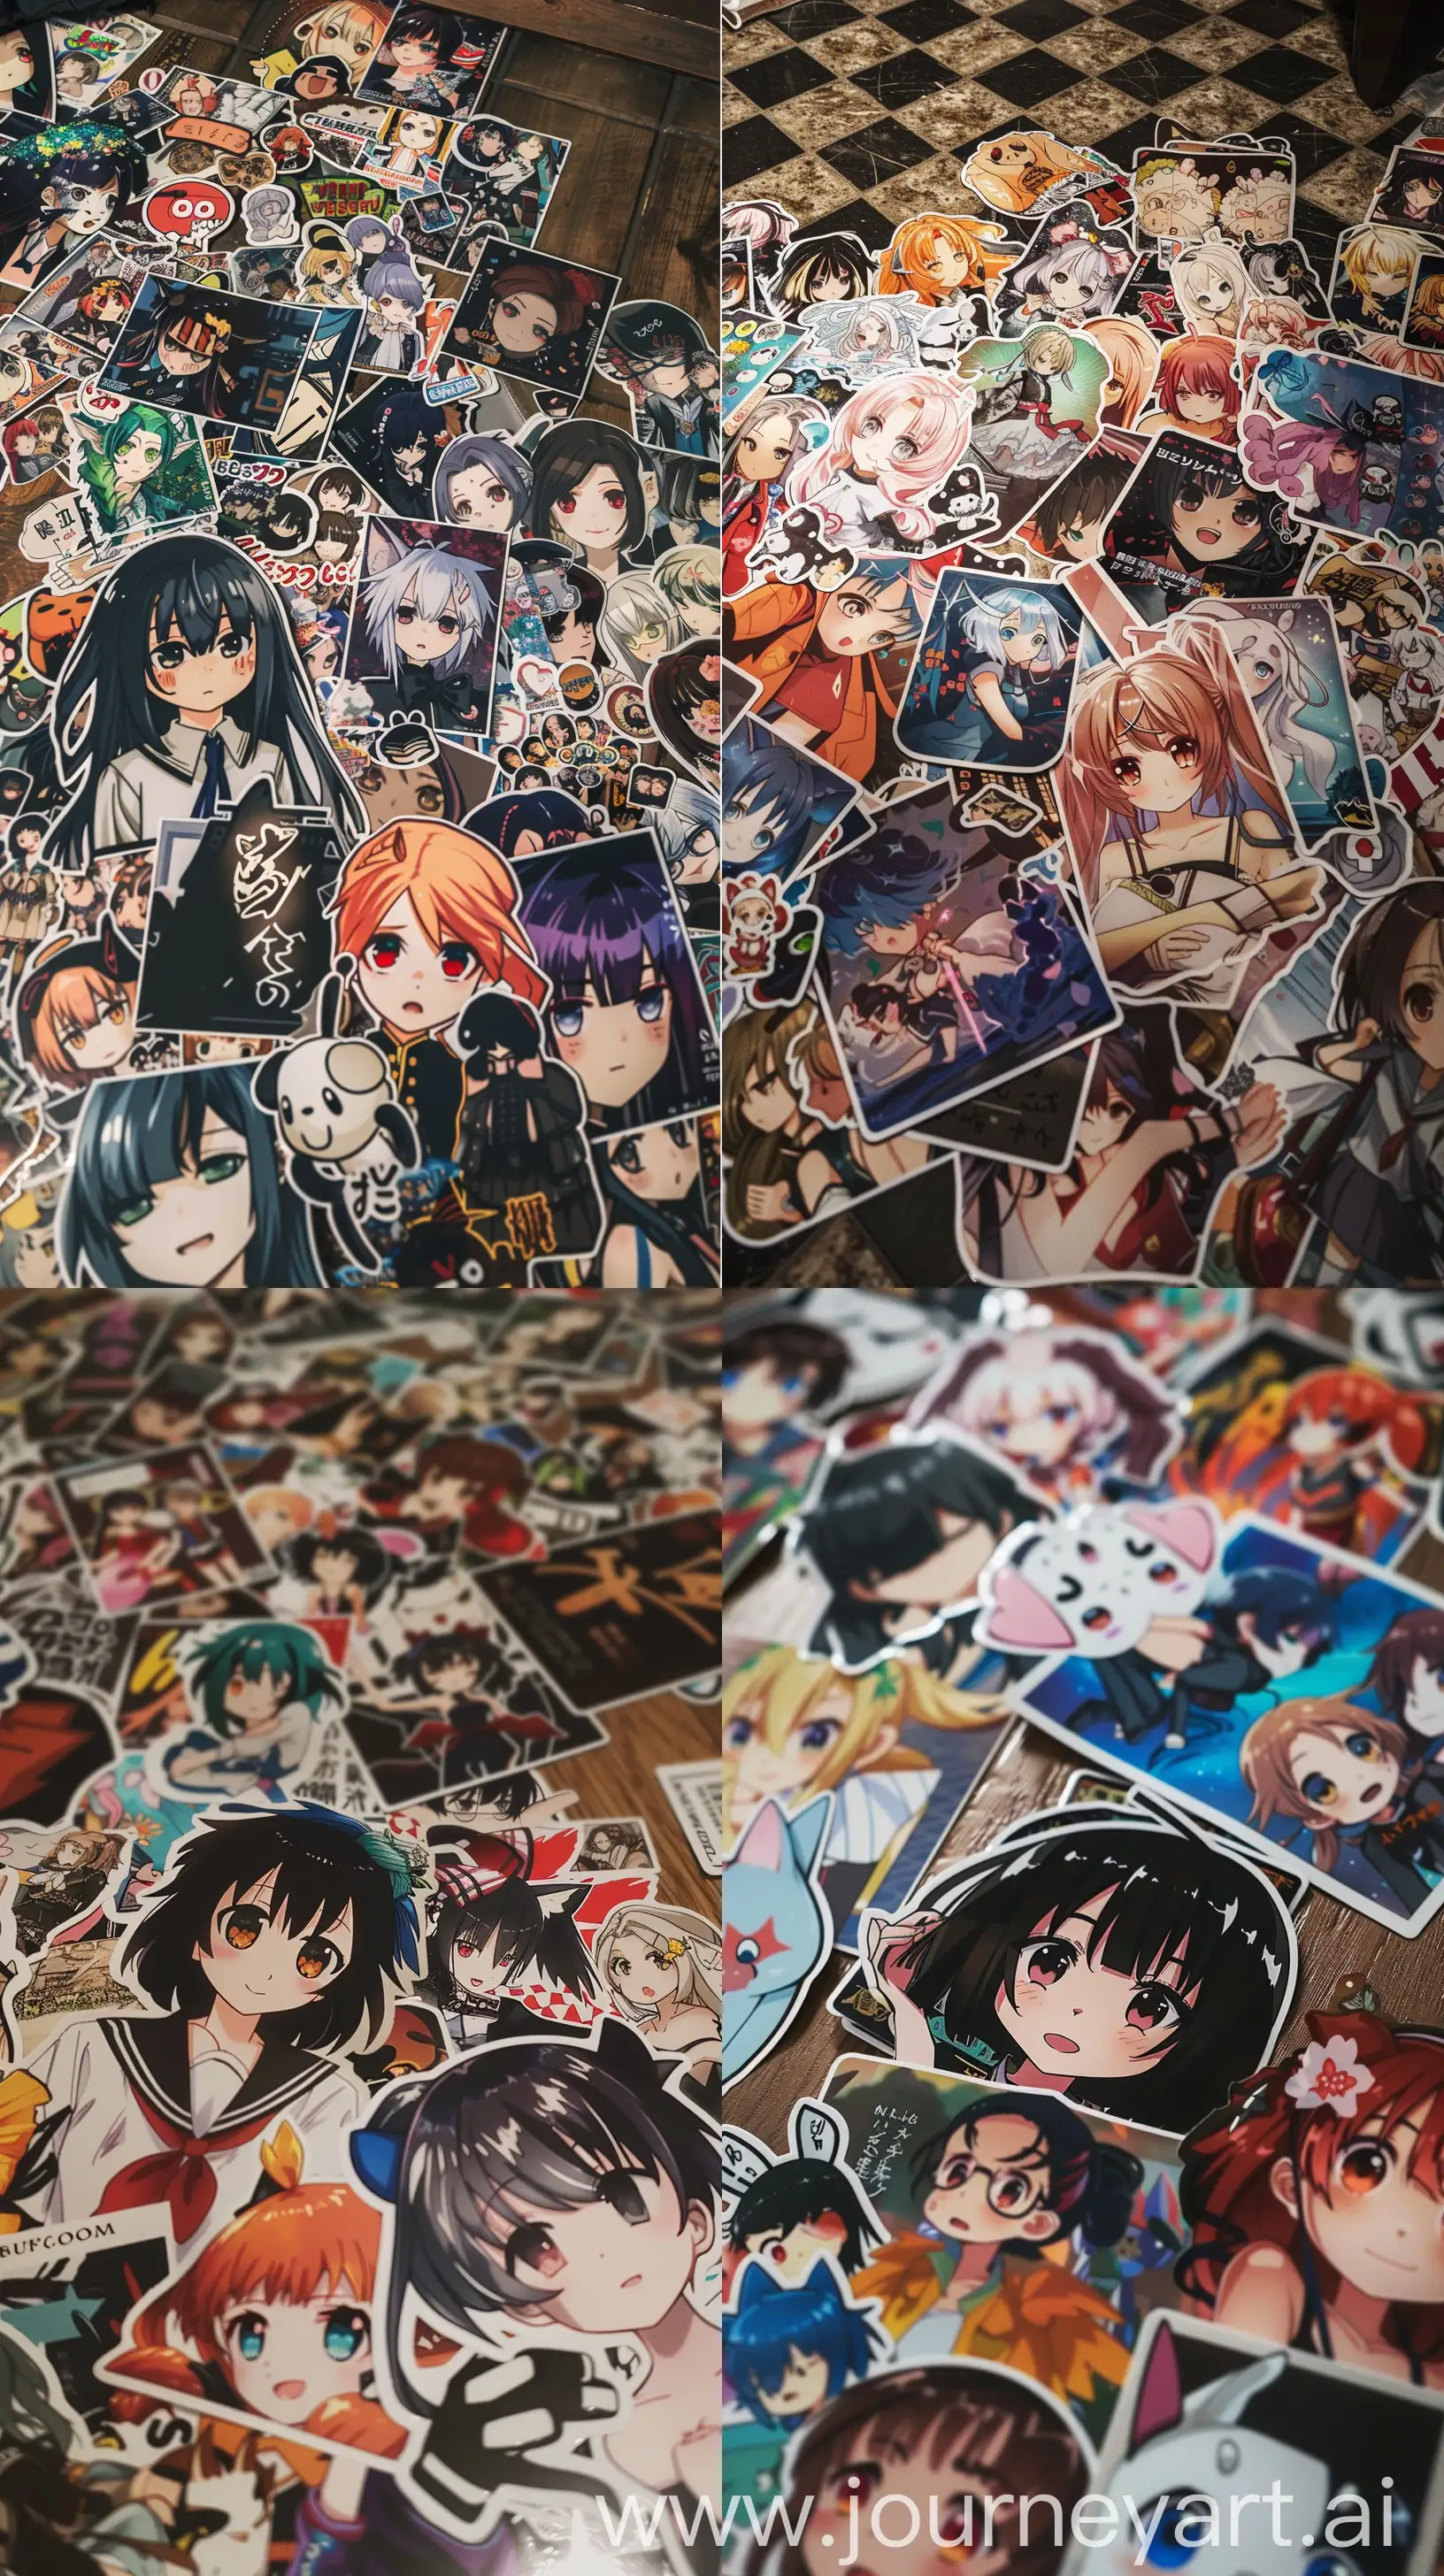 many anime stickers on the floor, --ar 9:16